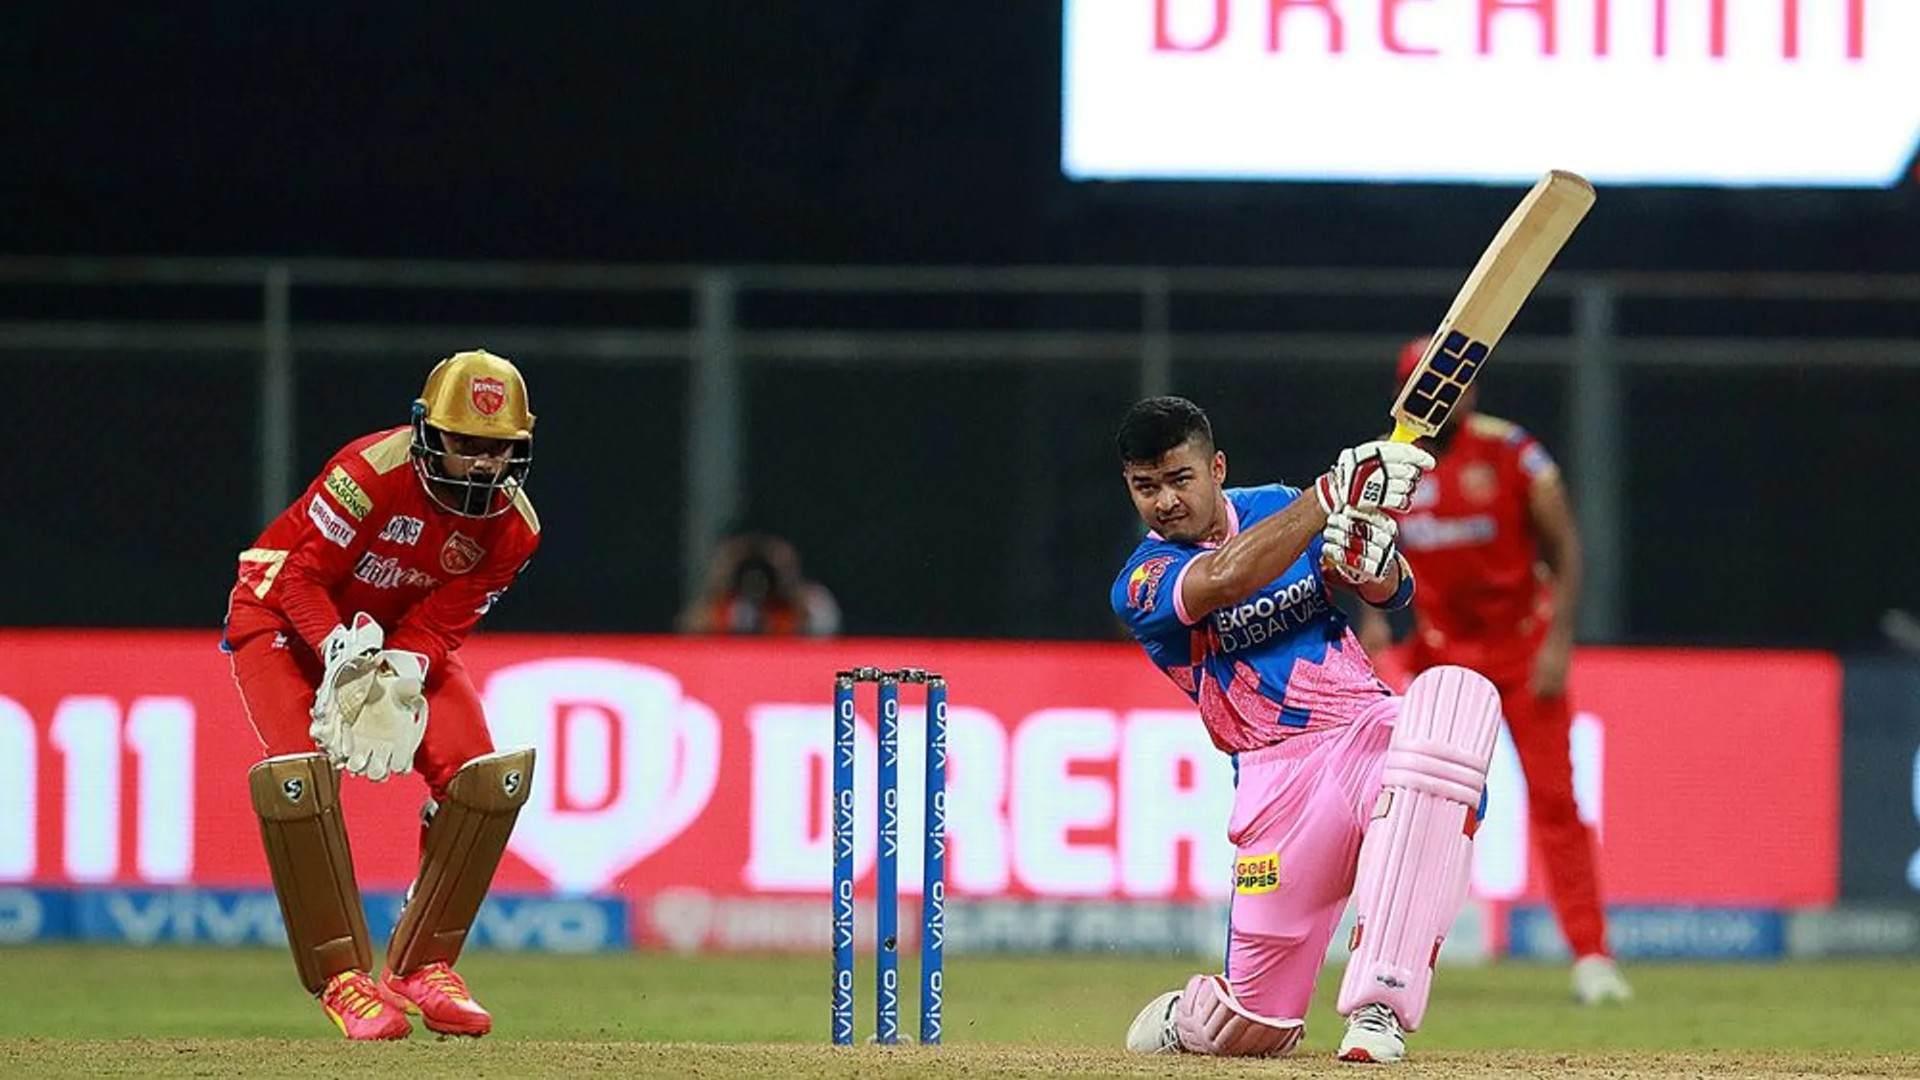 Riyan Parag hits a big shot. (Image: BCCI/IPL)